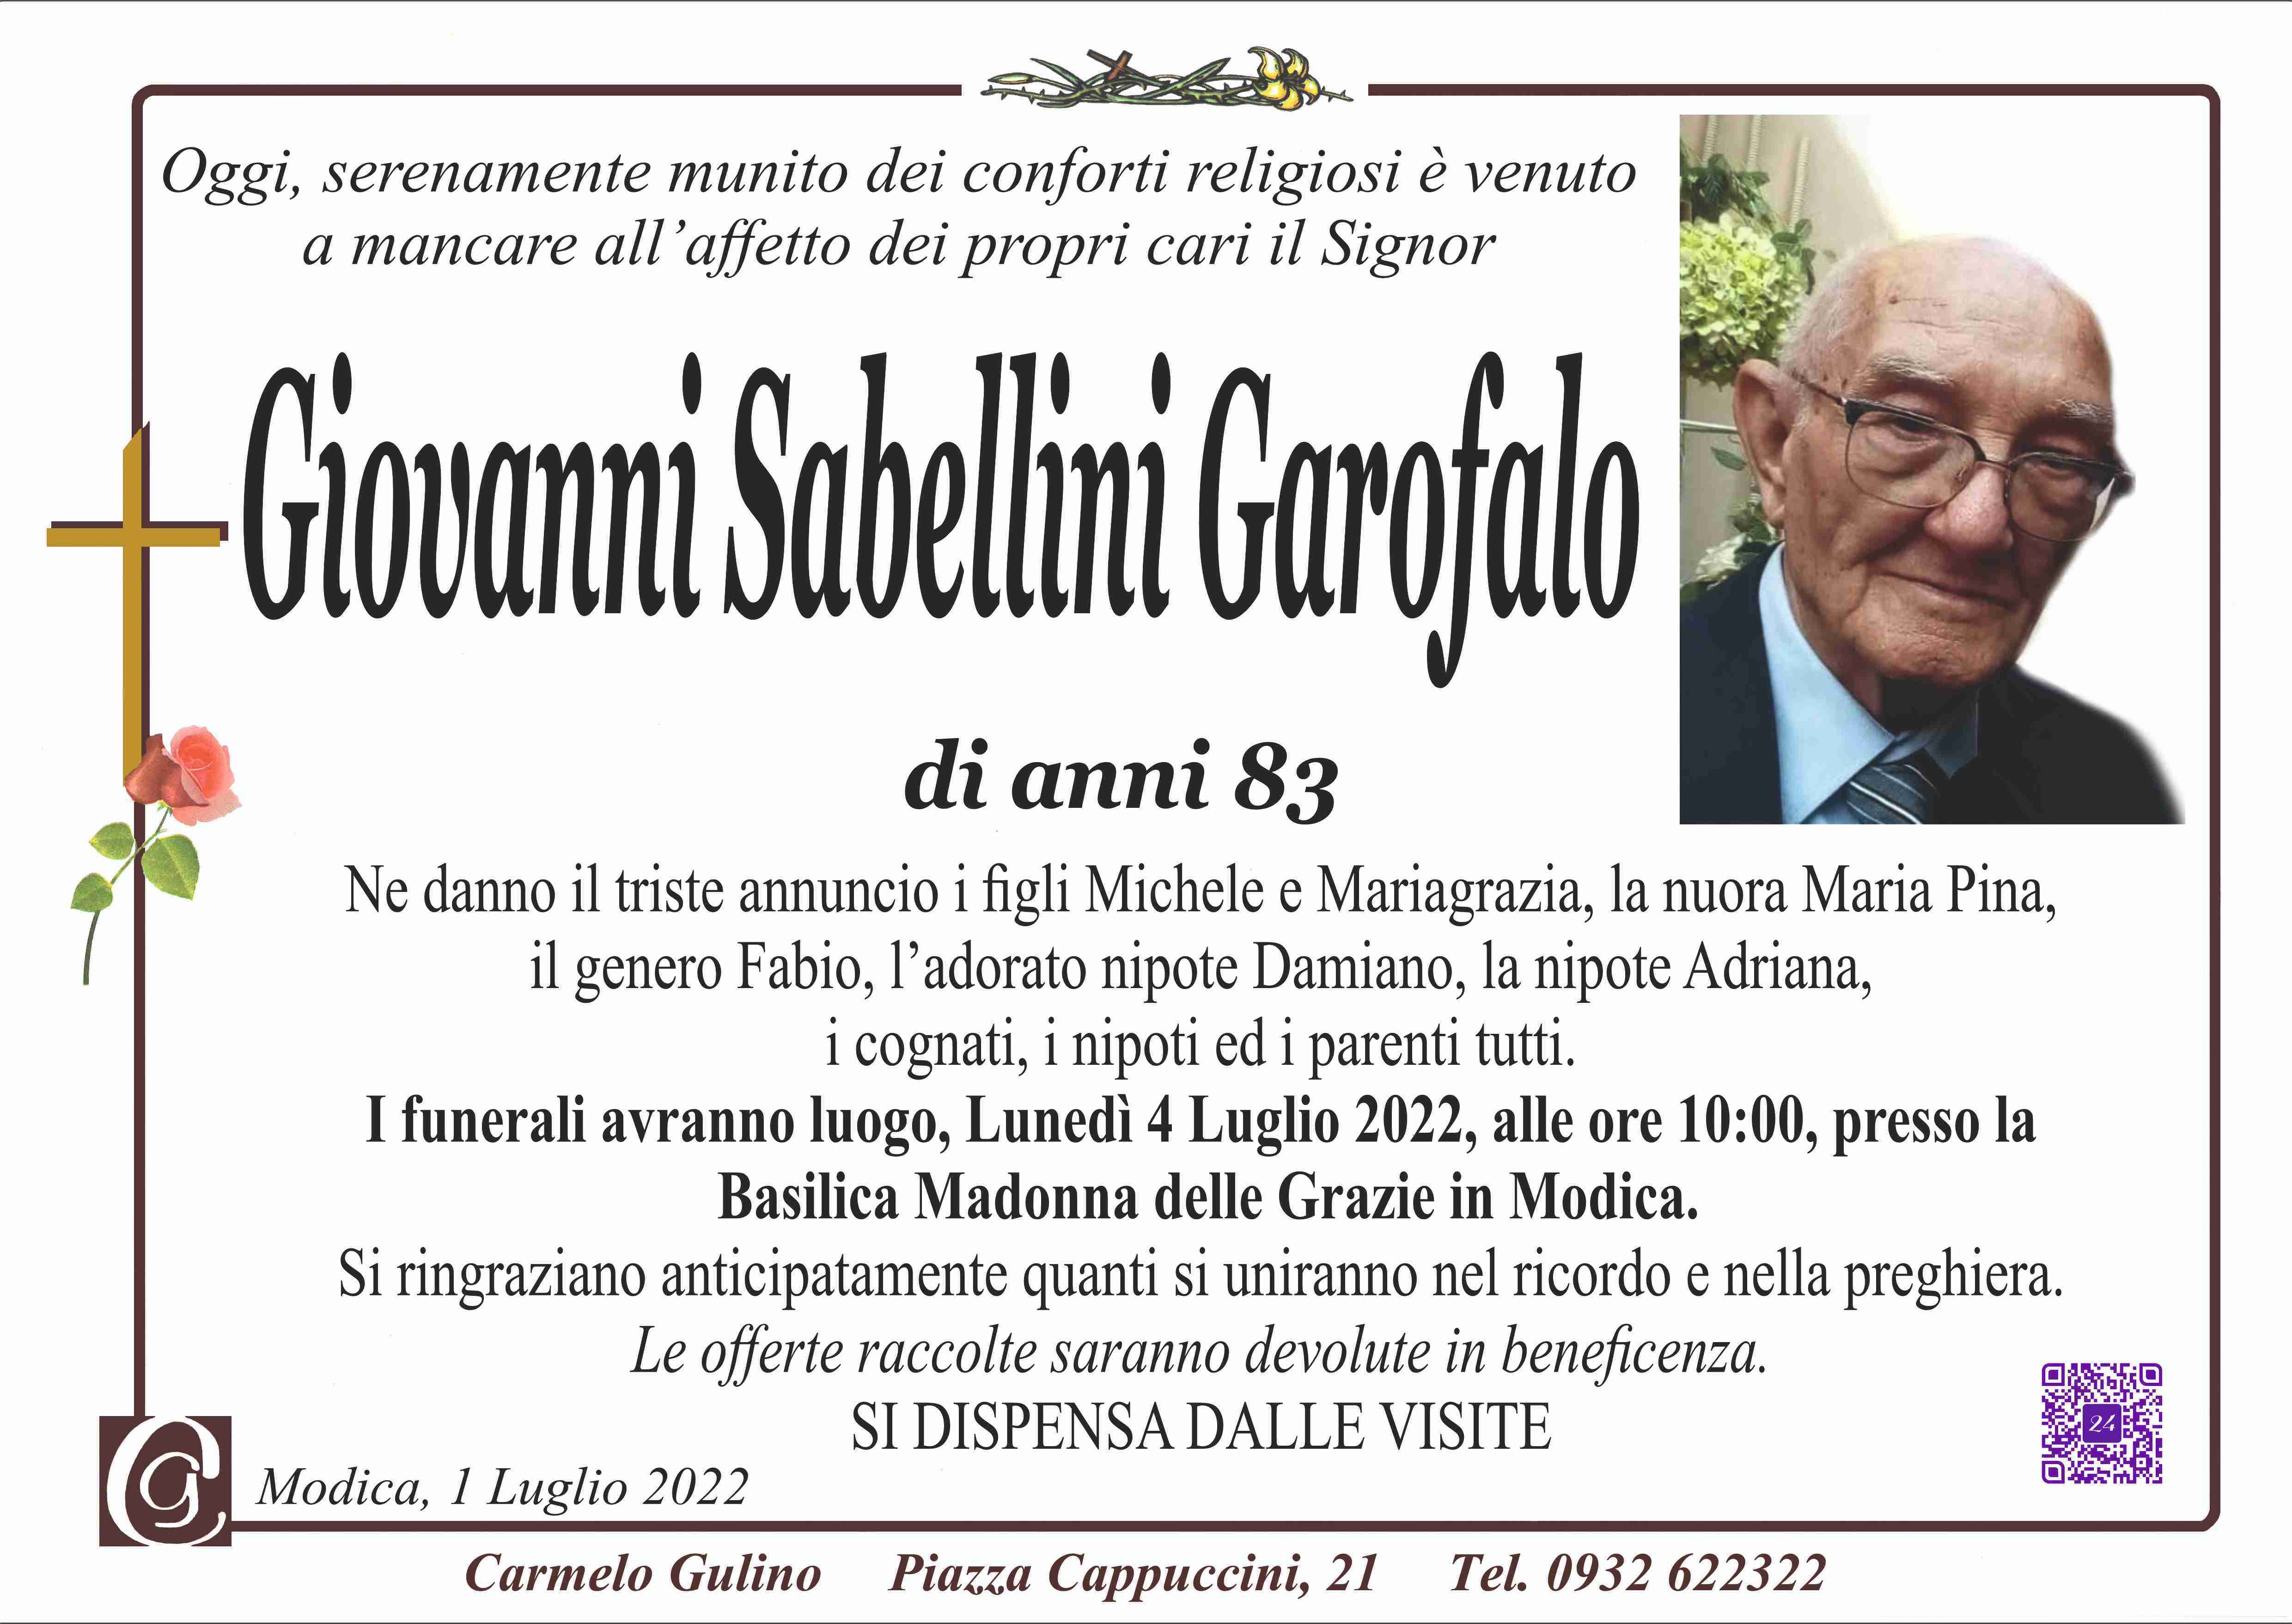 Giovanni Sabellini Garofalo